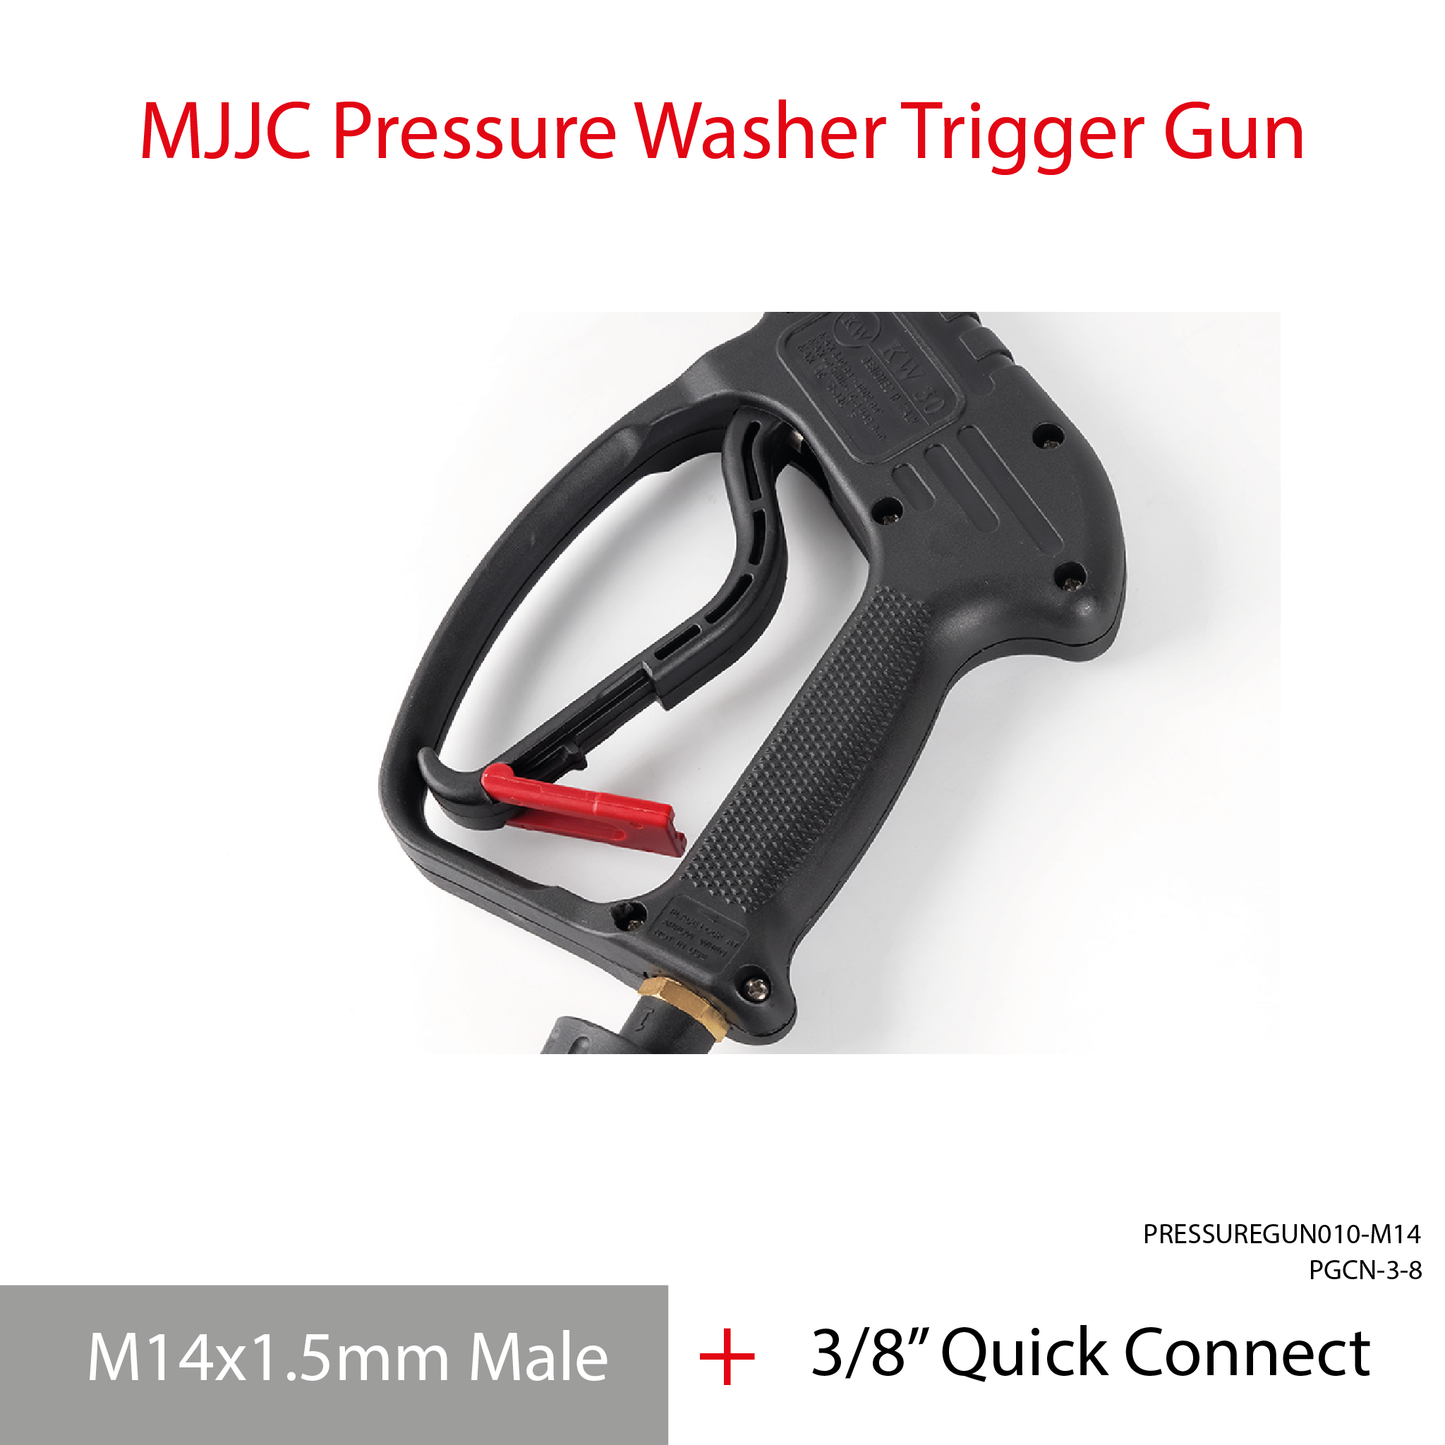 3/8" Quick Connect - MJJC Light Weight Pressure Washer Short Trigger Gun with Live Swivel